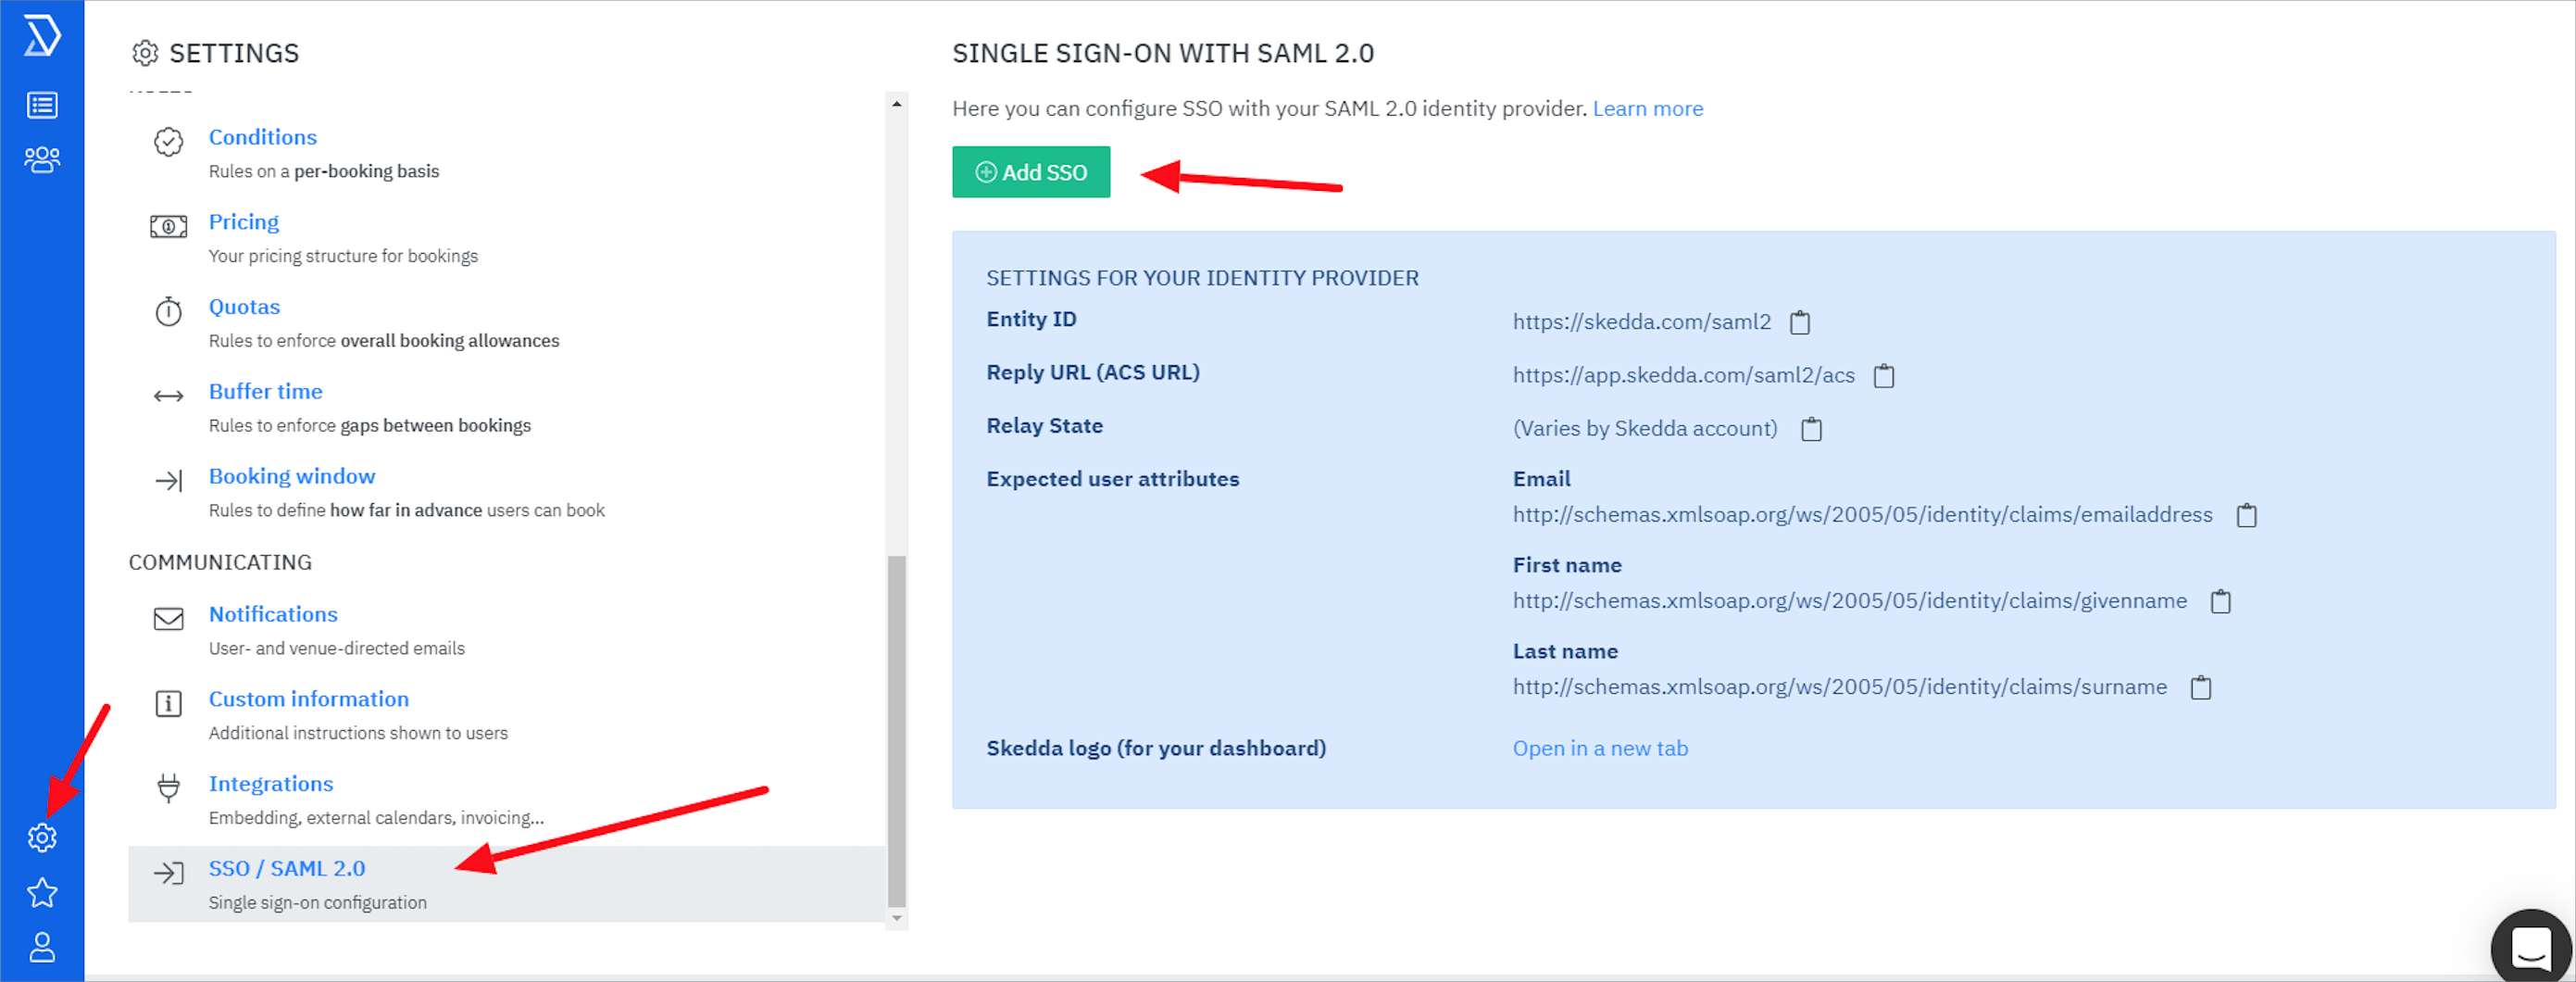 Settings > SSO / SAML 2.0, click add SSO